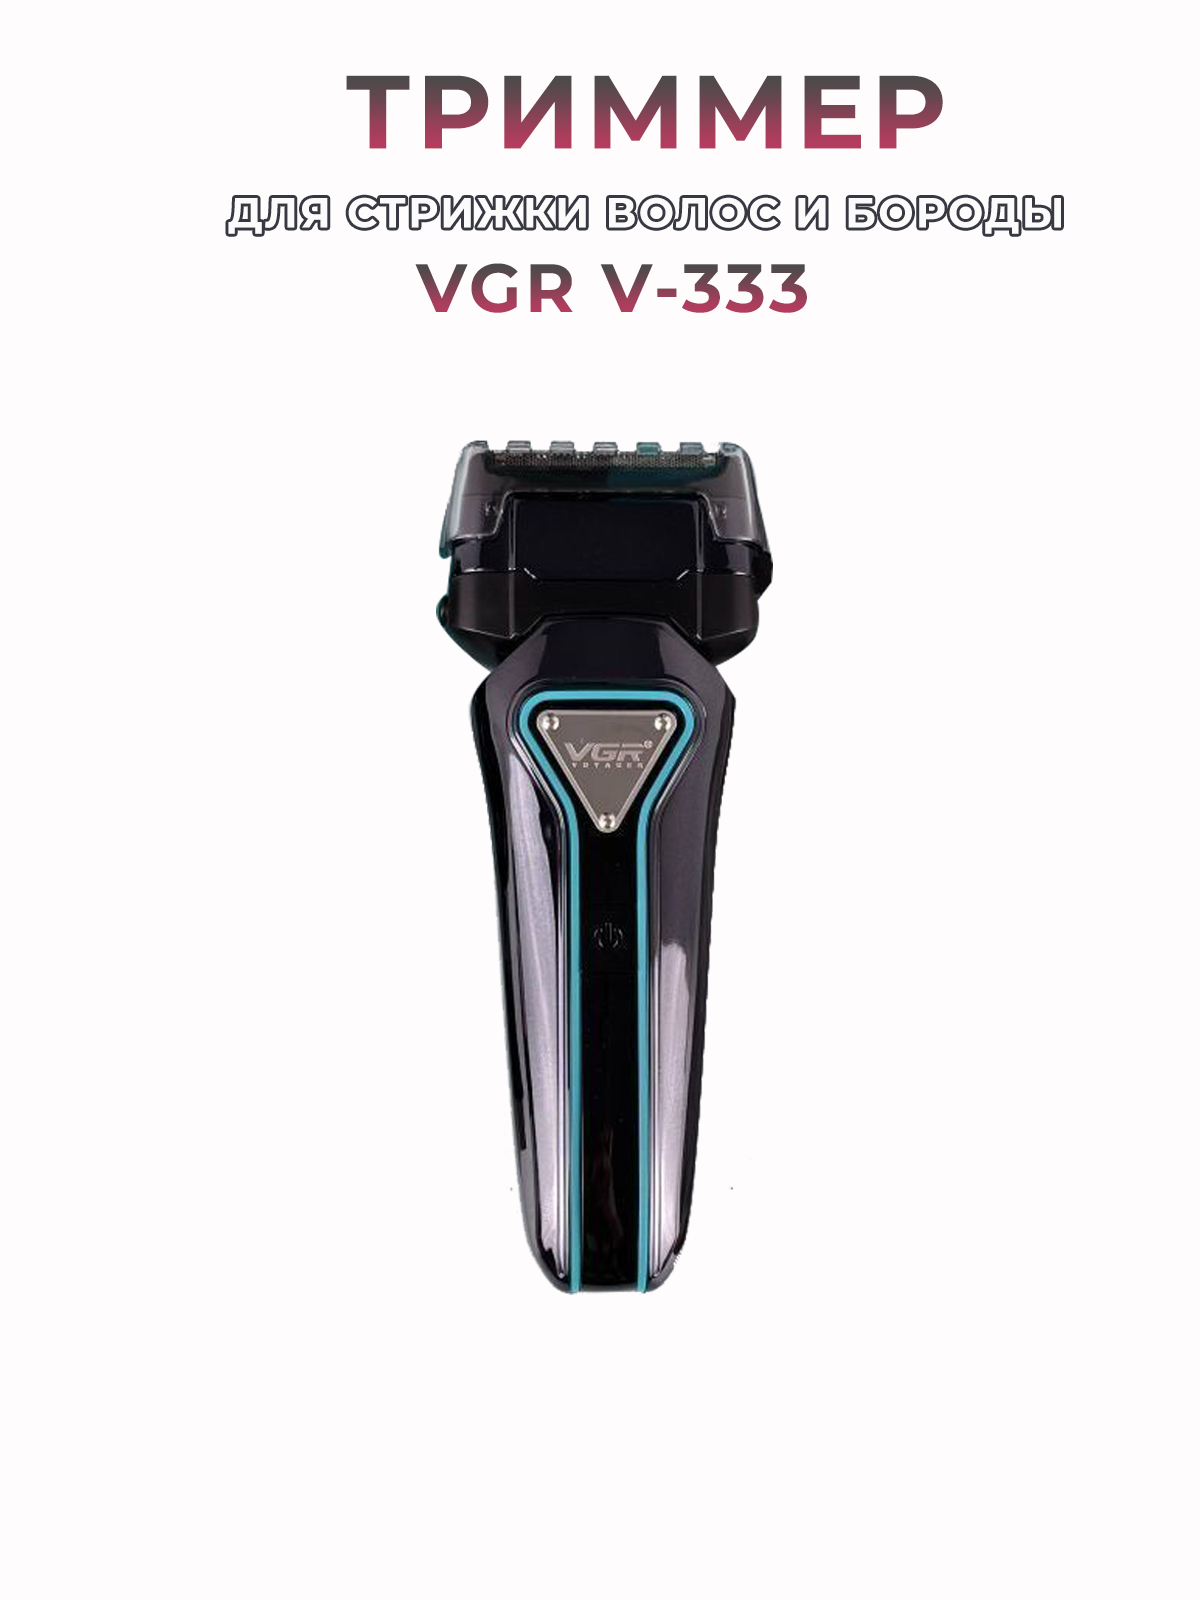 Электробритва VGR Professional V-333 голубой, серебристый электробритва beheart g520 триммер для носа ts01 серебристый